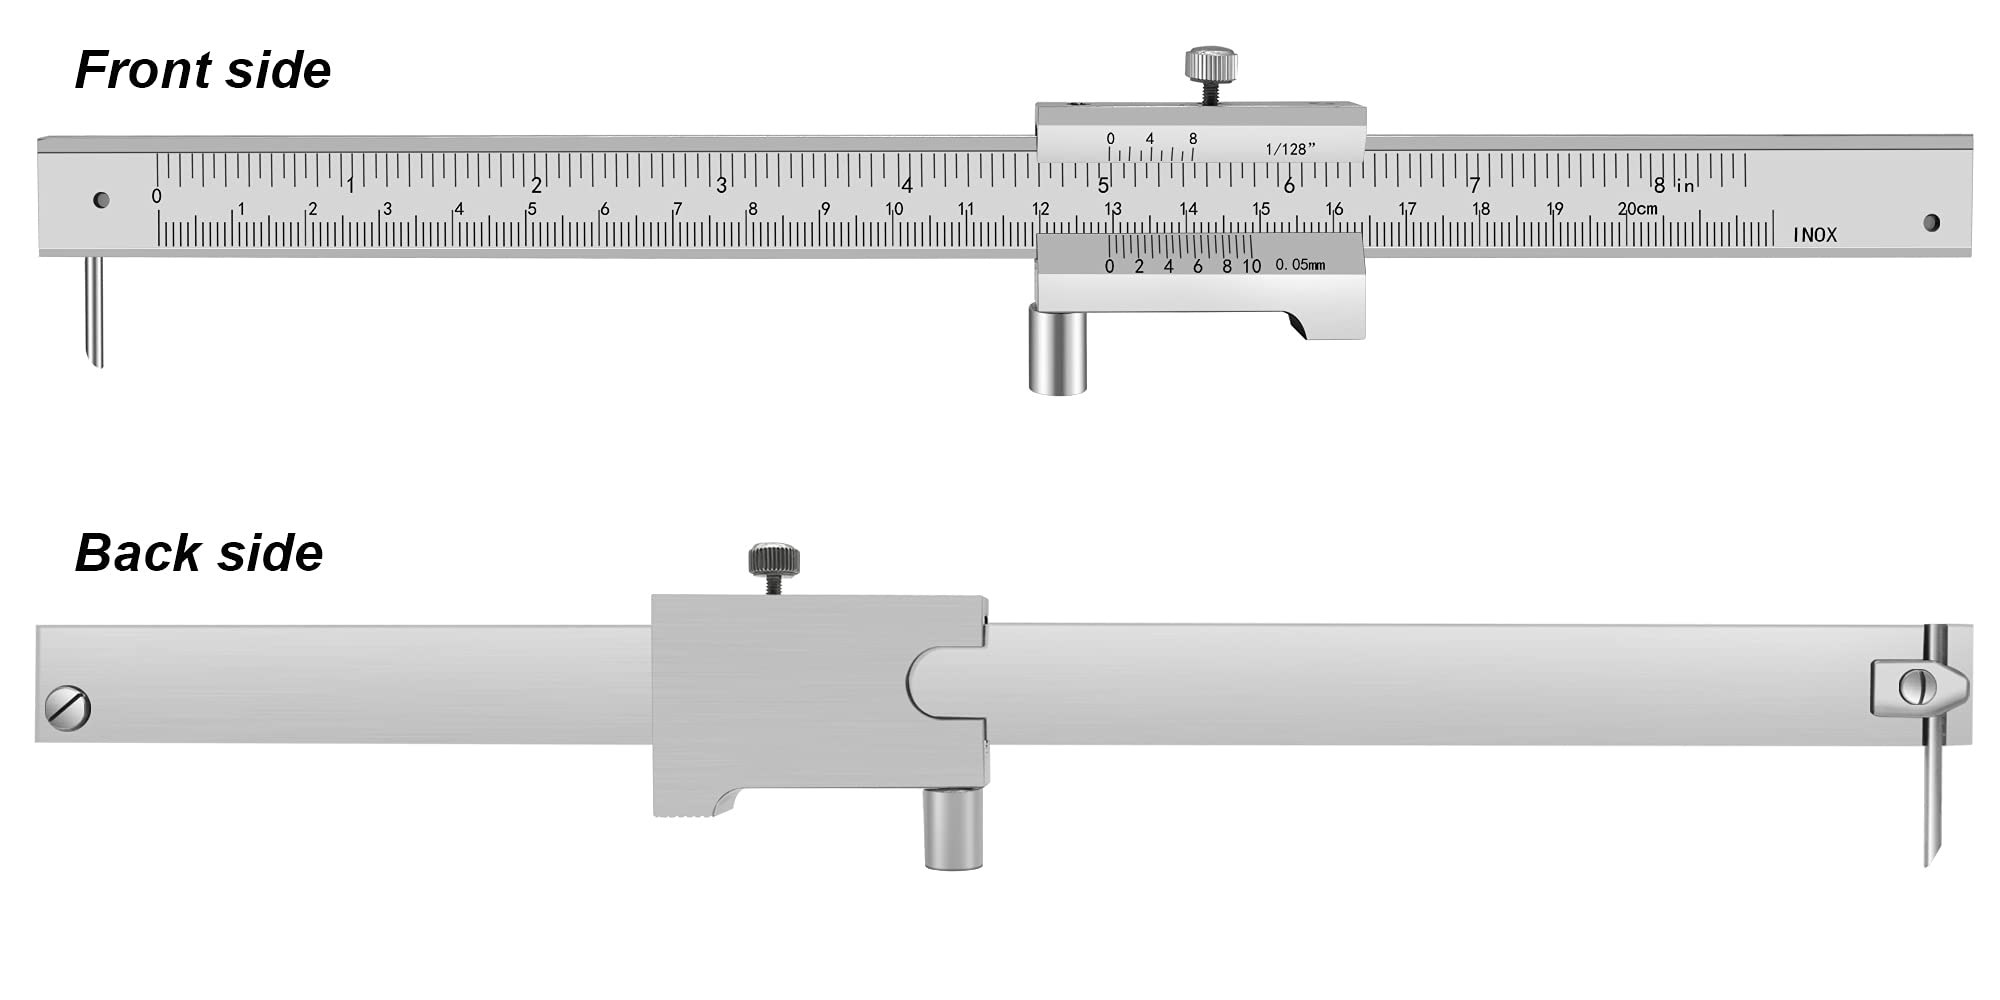 ZLKSKER Parallel Crossed Caliper 0-20cm (0-8 inch) with 2 Carbide Scriber/Needle, Stainless Steel Vernier Calipers, Marking Gauge, Marking Tool